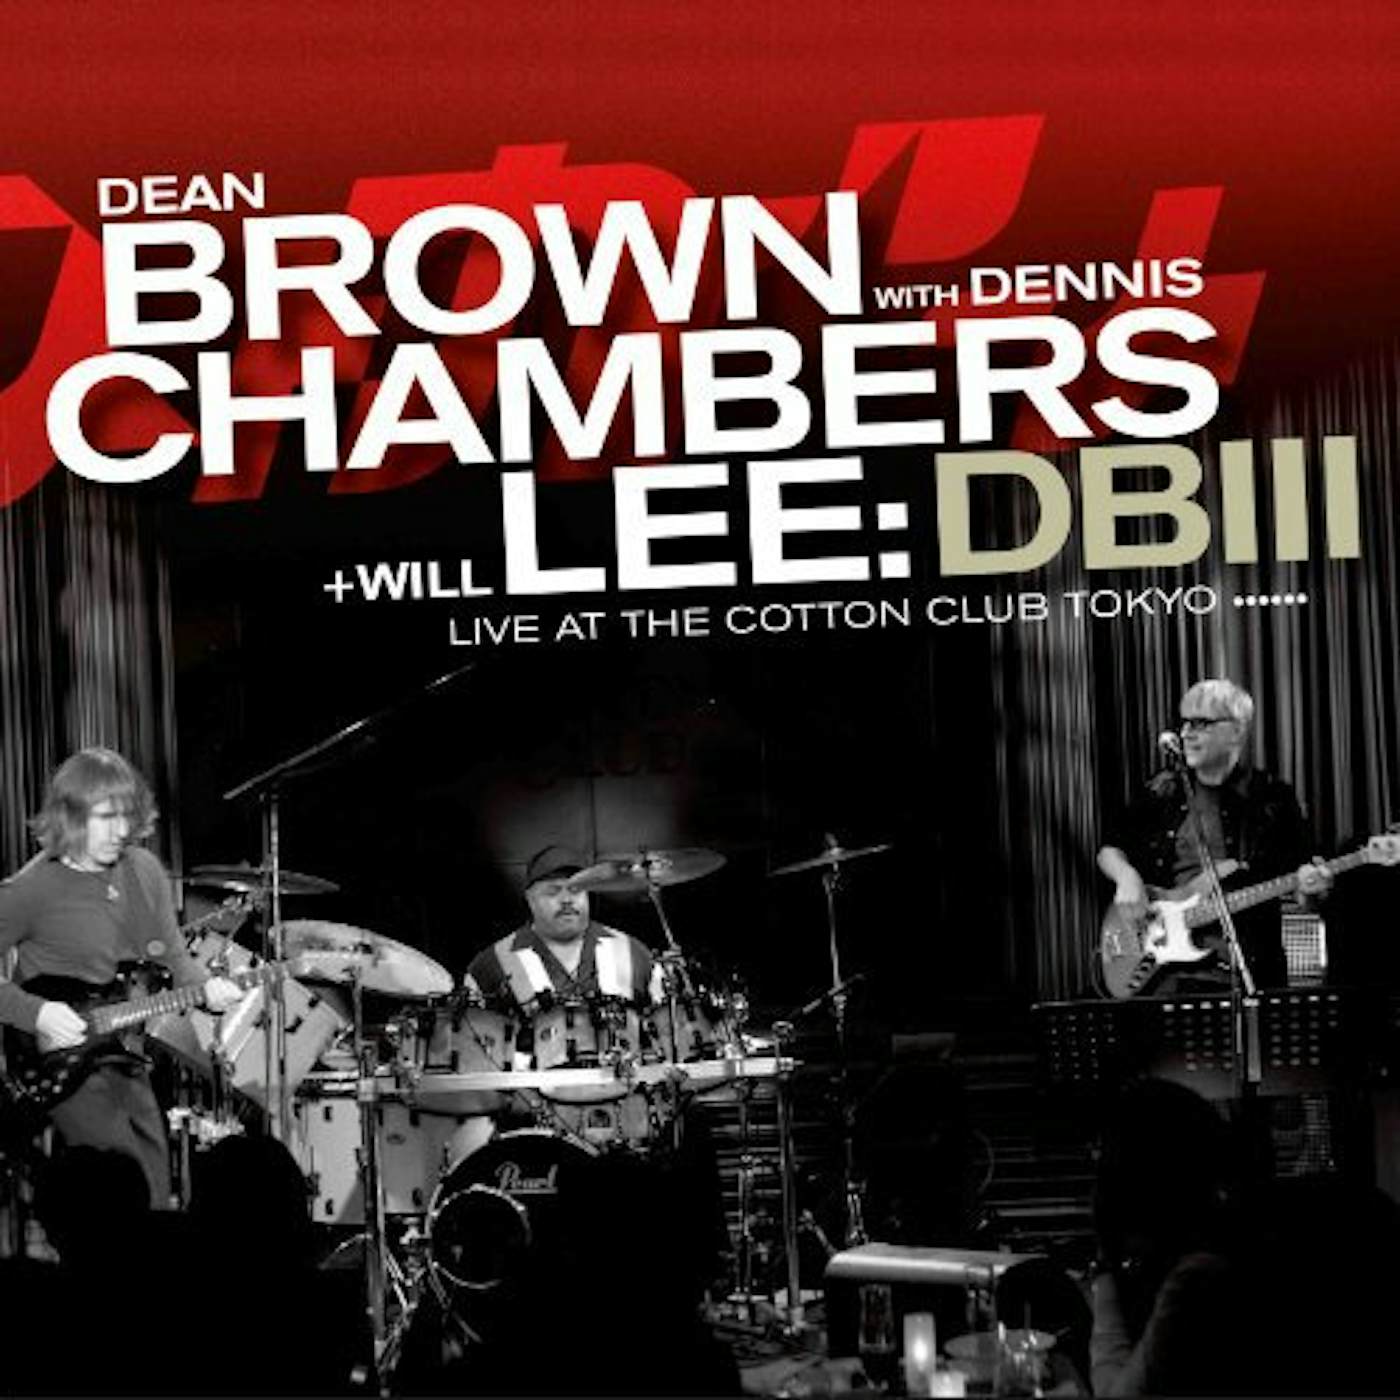 Dean Brown & Dennis Chambers DB III Vinyl Record